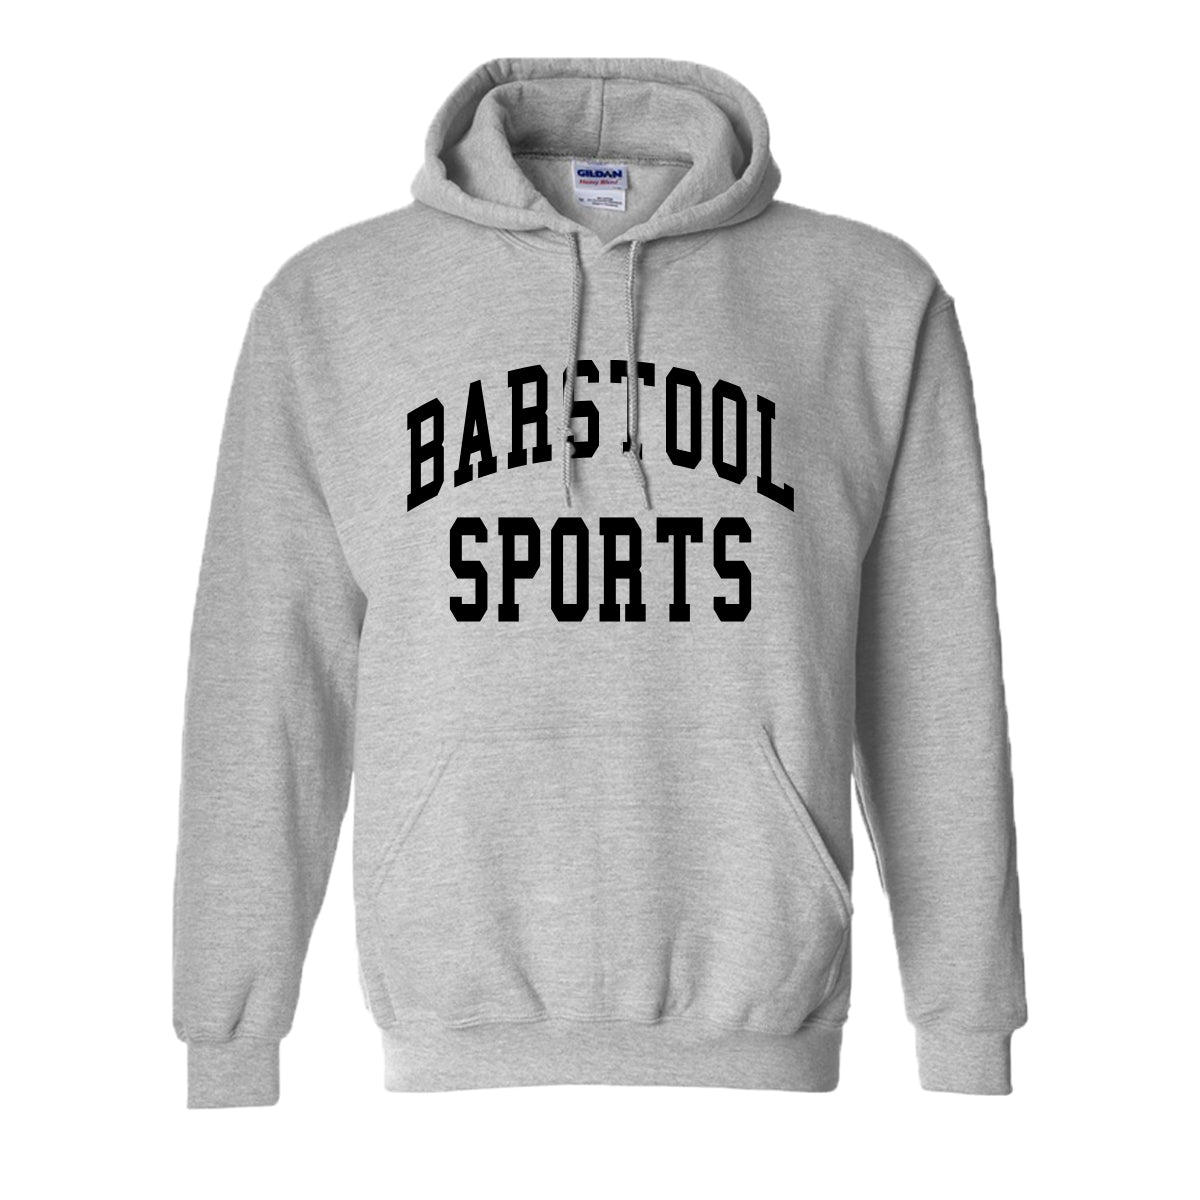 Barstool Sports Hoodie - Barstool Sports Canada Hoodies & Sweatshirts